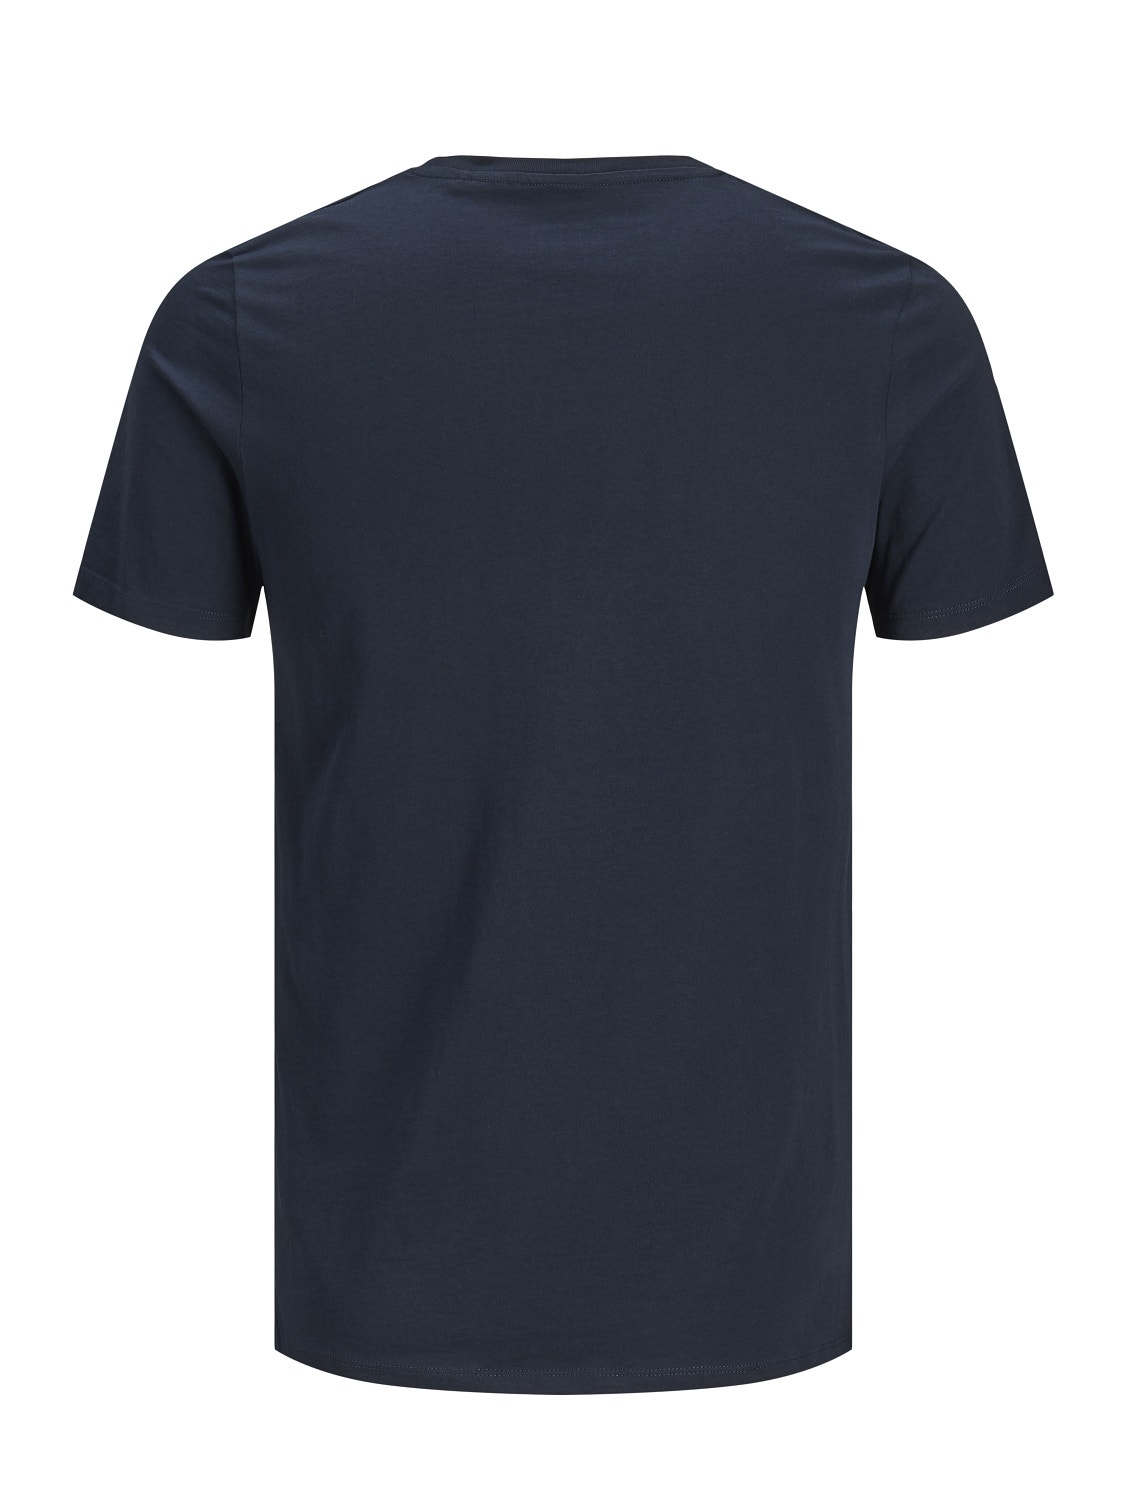 Jack & Jones Logo Rundhals T-shirt -Navy Blazer - 12151955